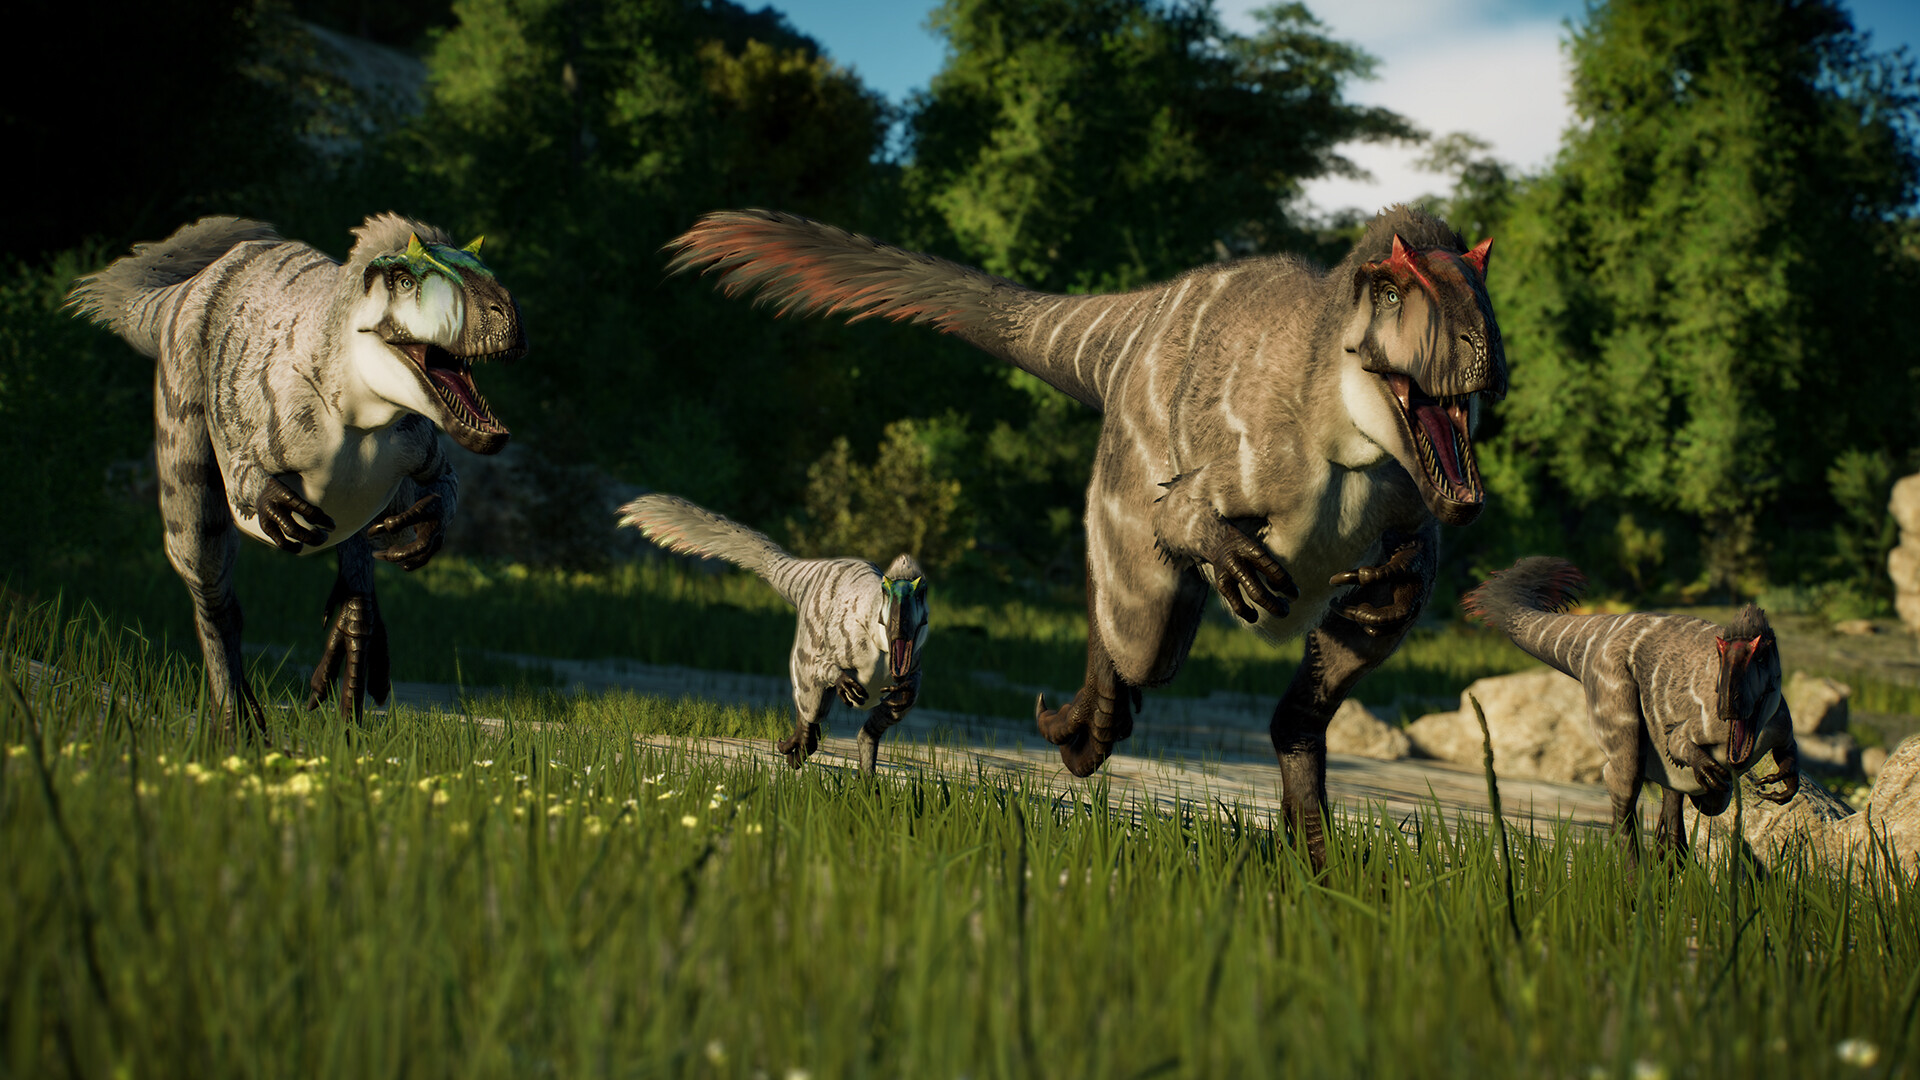 Jurassic World Evolution 2 - Feathered Species Pack DLC EU Steam CD Key